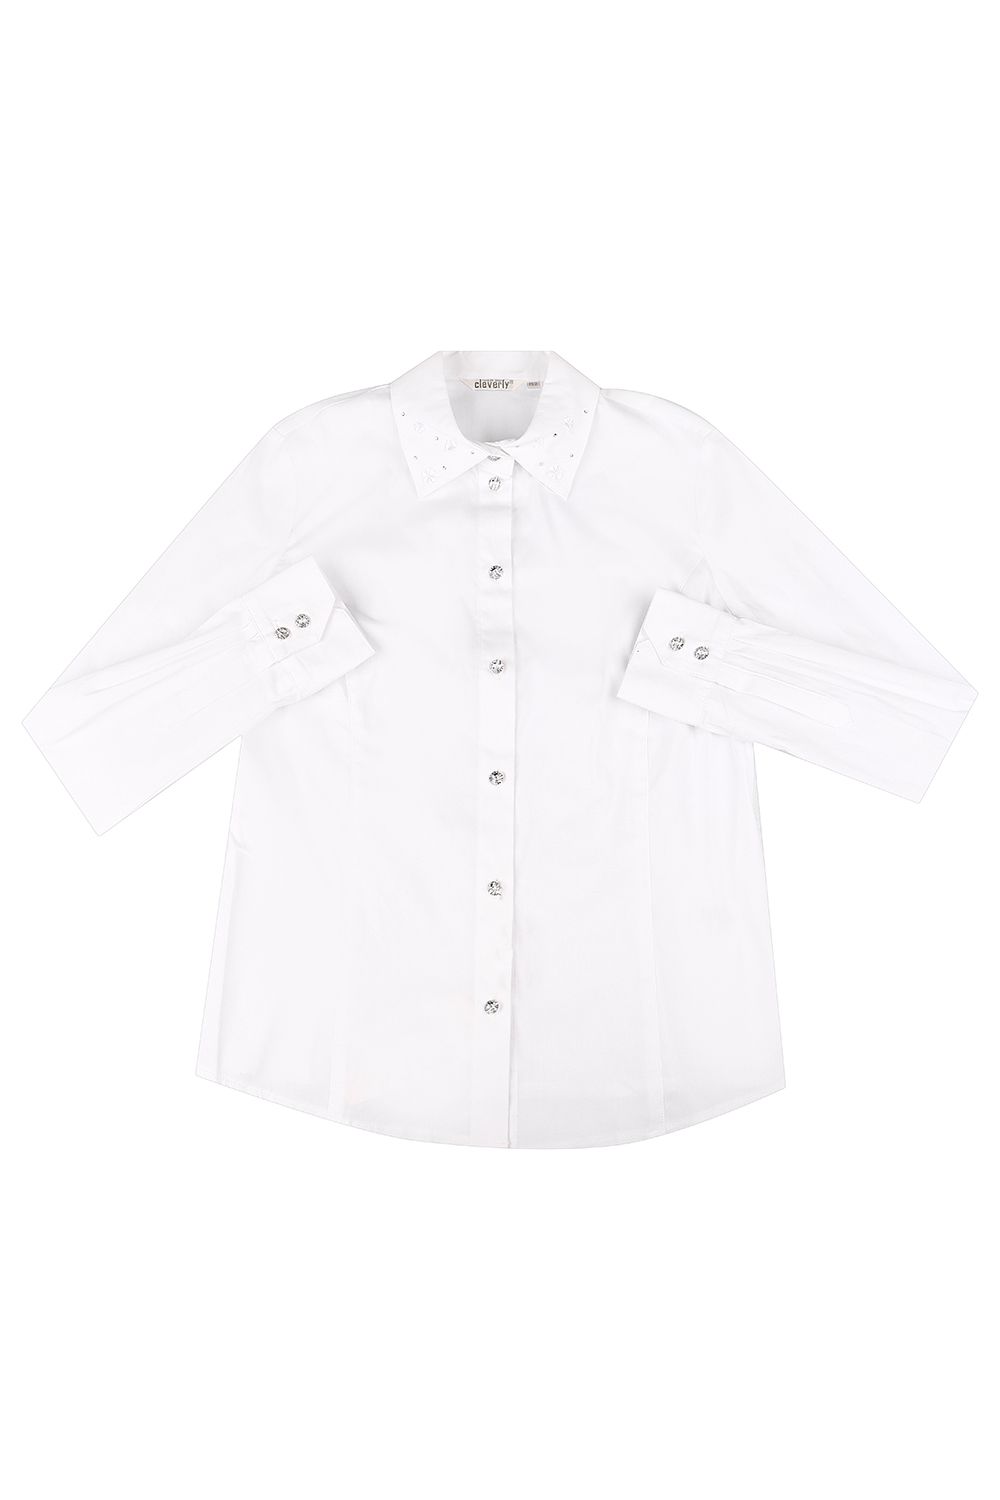 Блуза Cleverly, размер 146, цвет белый S7CB02-0401/0401 - фото 1